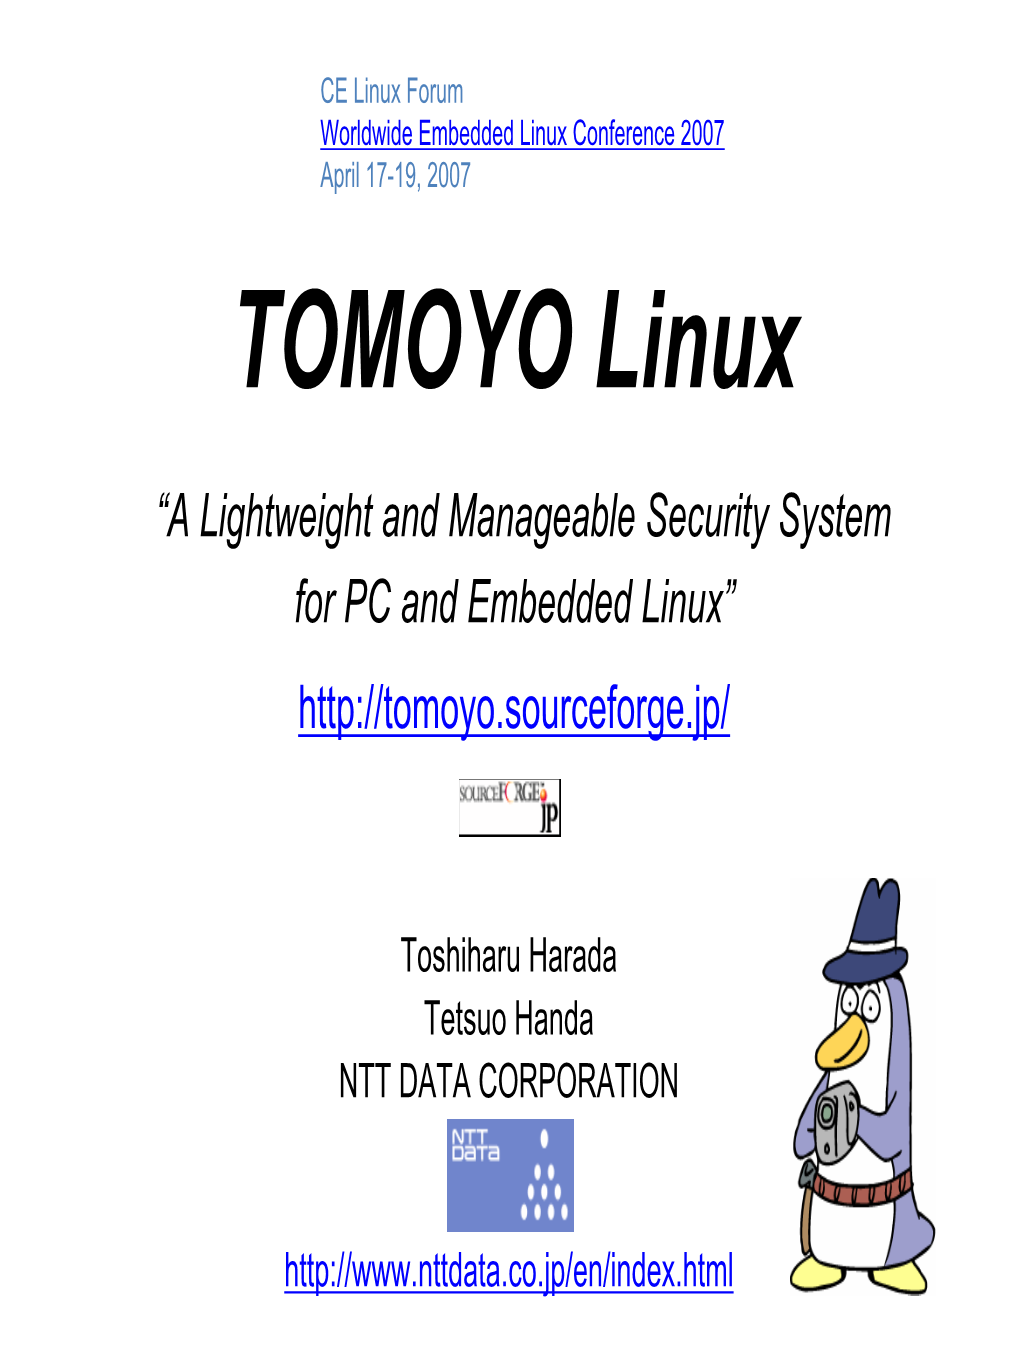 TOMOYO Linux